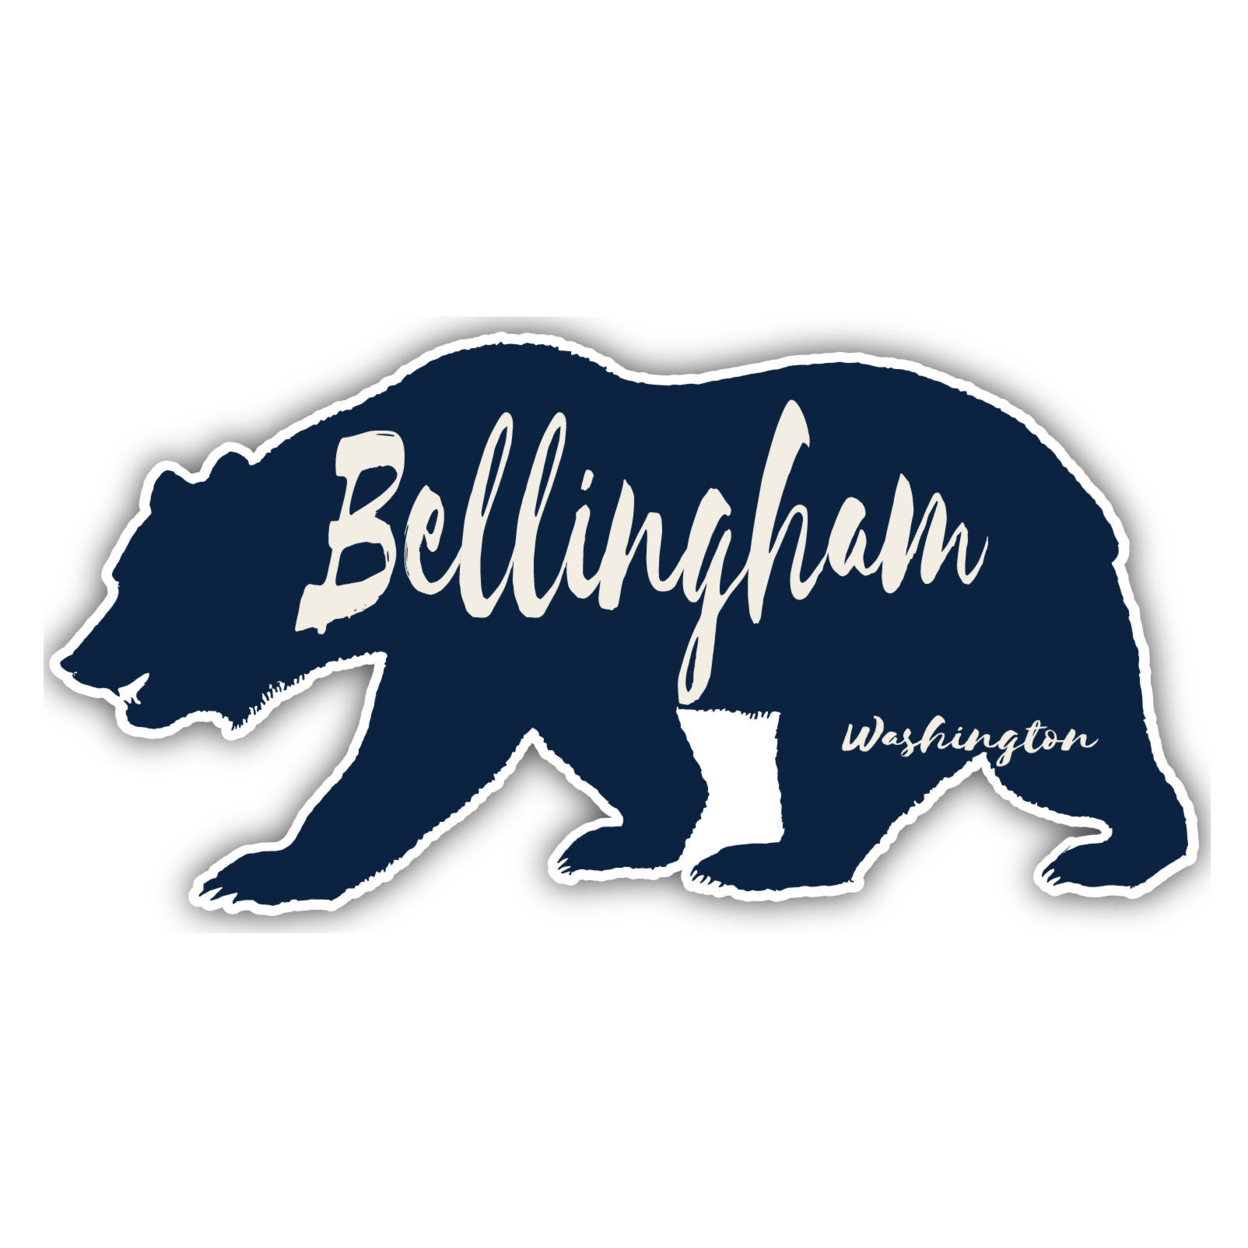 Bellingham Washington Souvenir Decorative Stickers (Choose Theme And Size) - 4-Pack, 6-Inch, Bear